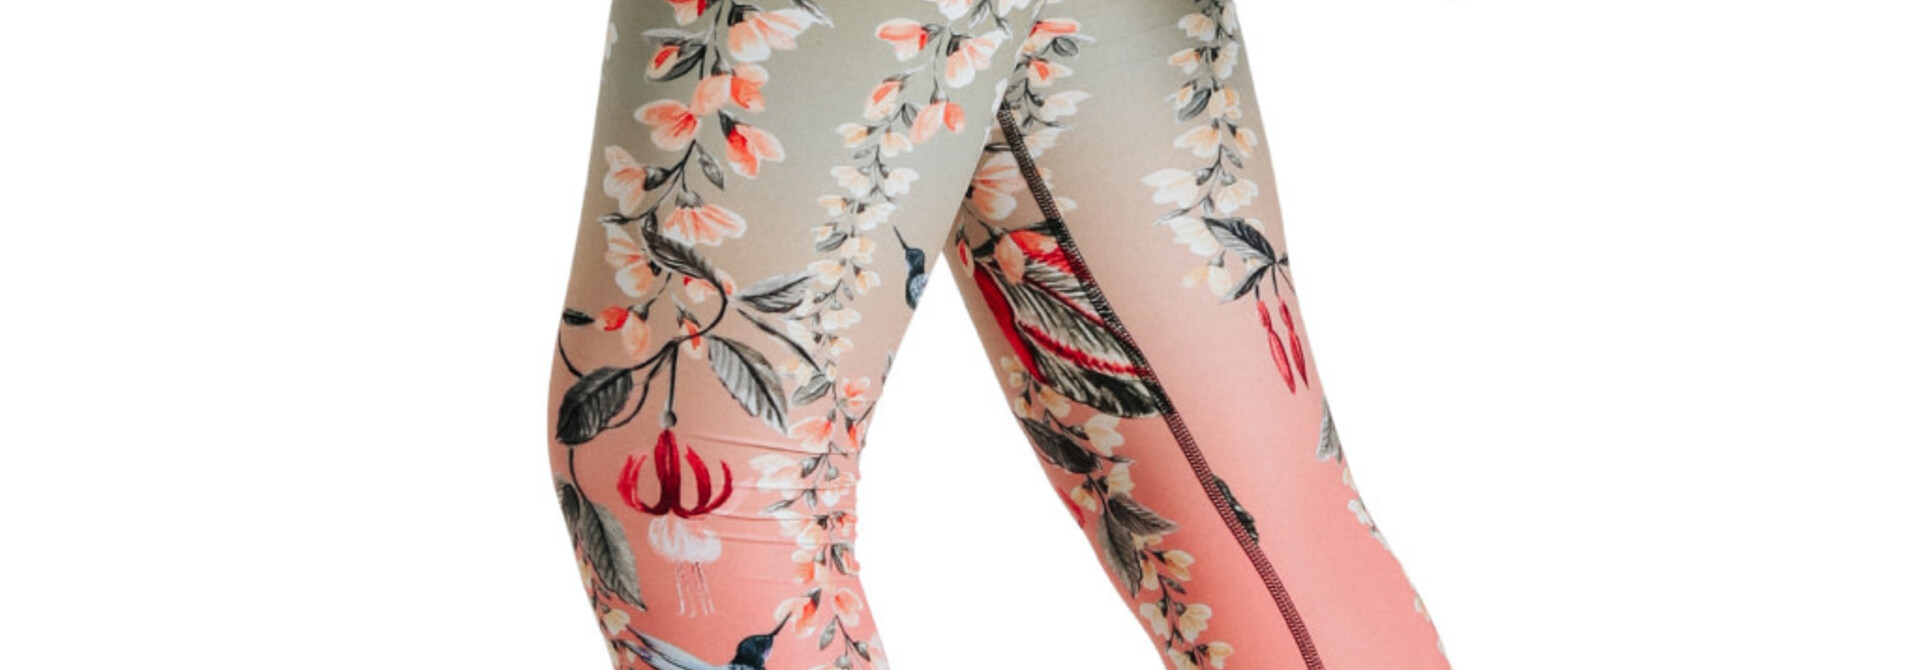 Pretty in Pink Eco-Friendly Women's Printed Yoga Leggings | Yoga Democracy